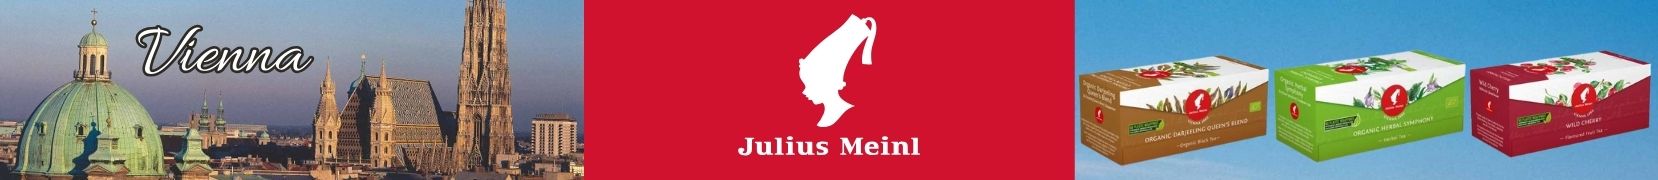 Julius Meinl Tea